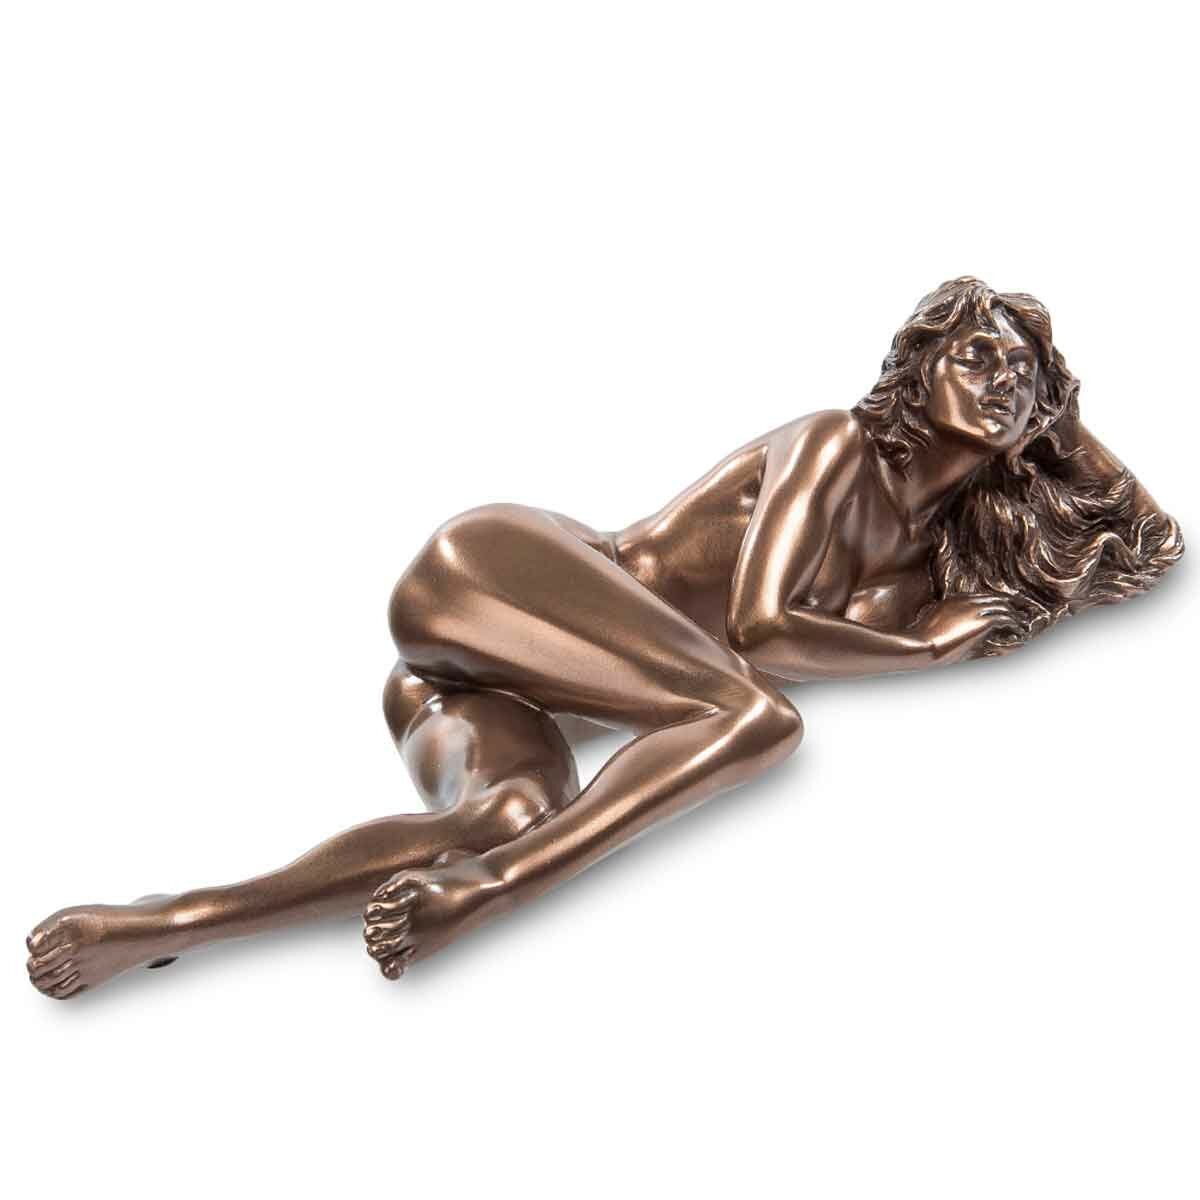 Фигурка статуэтка коллекционная Девушка WS-131, Veronese, 21 см